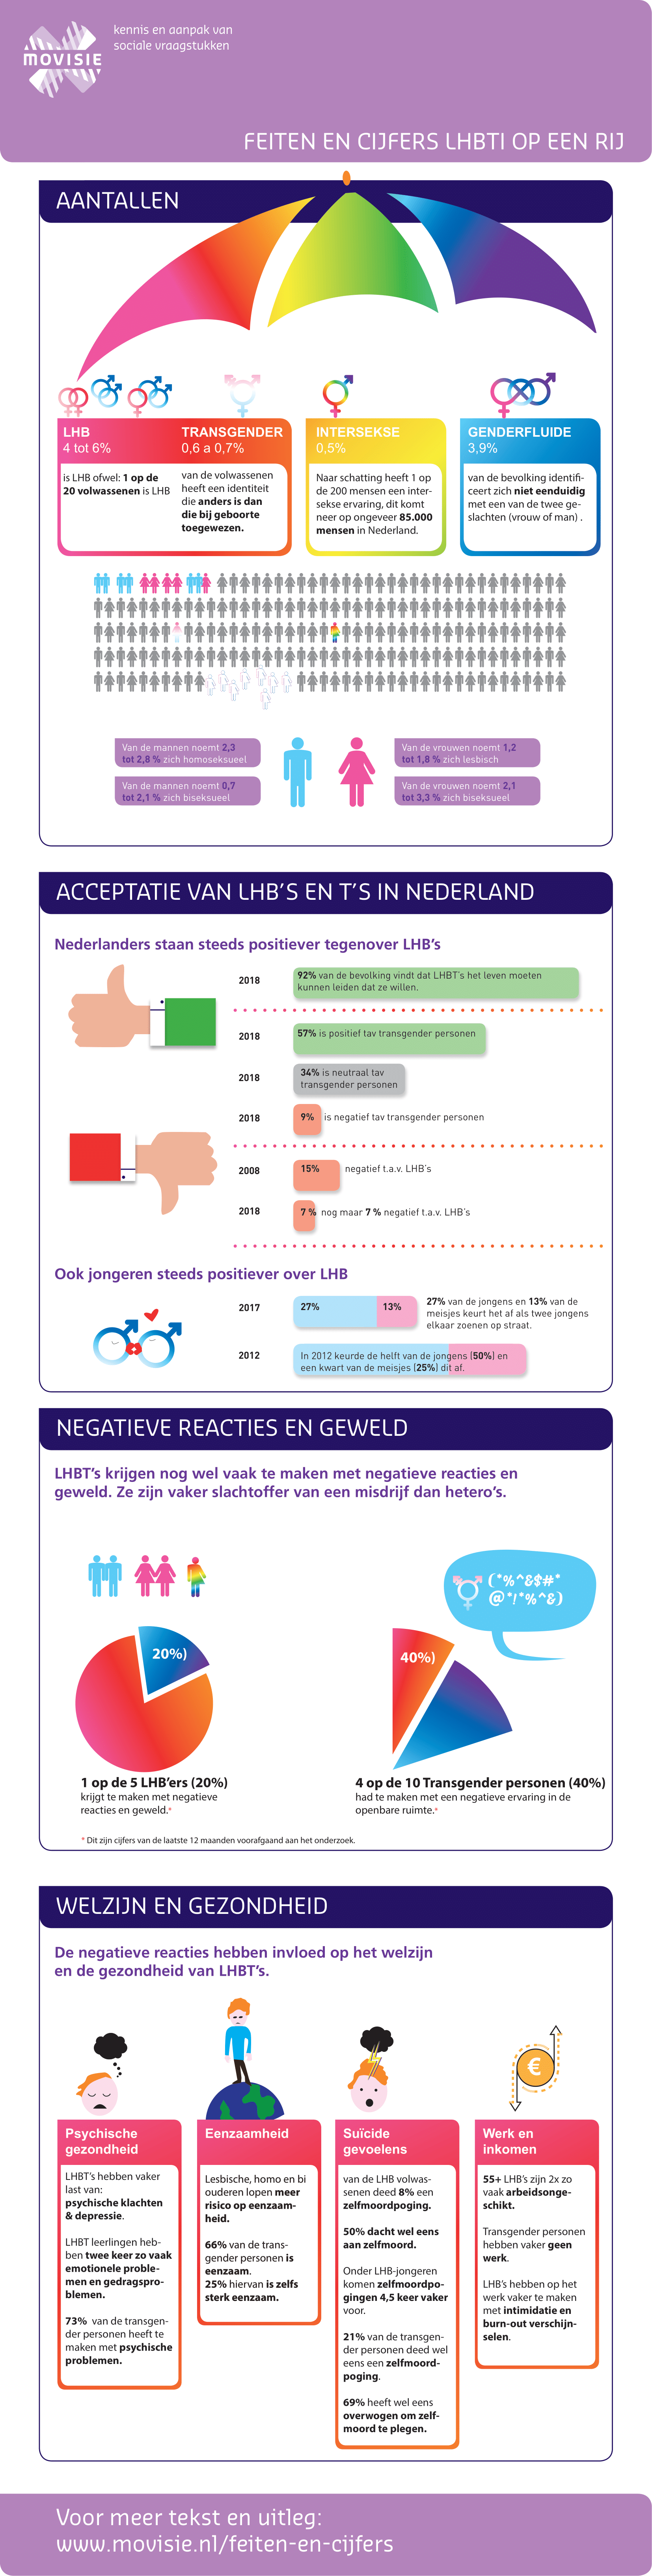 LHBTI feiten en cijfers infographic